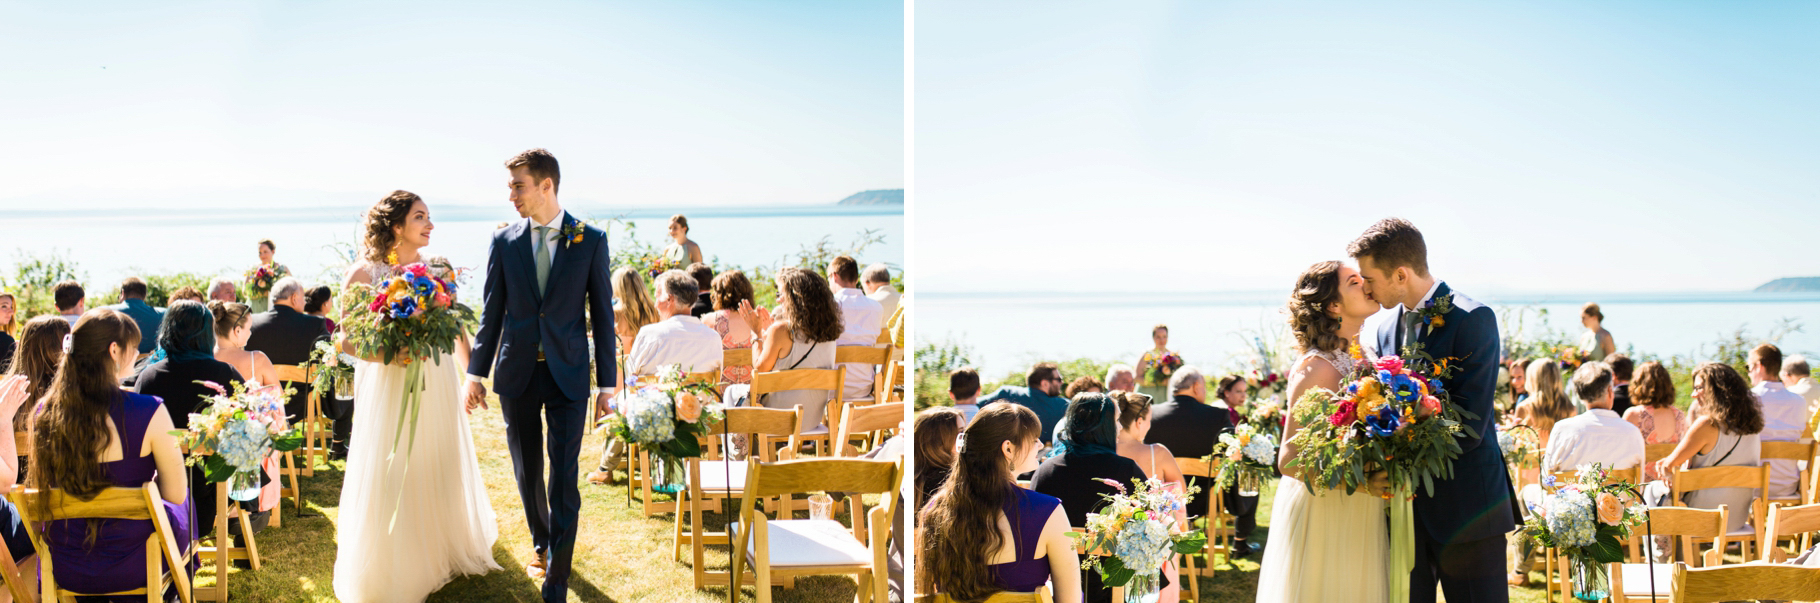 38-summer-outdoor-ceremony-edmonds-seattle-wedding-photographer-olympics-waterfront